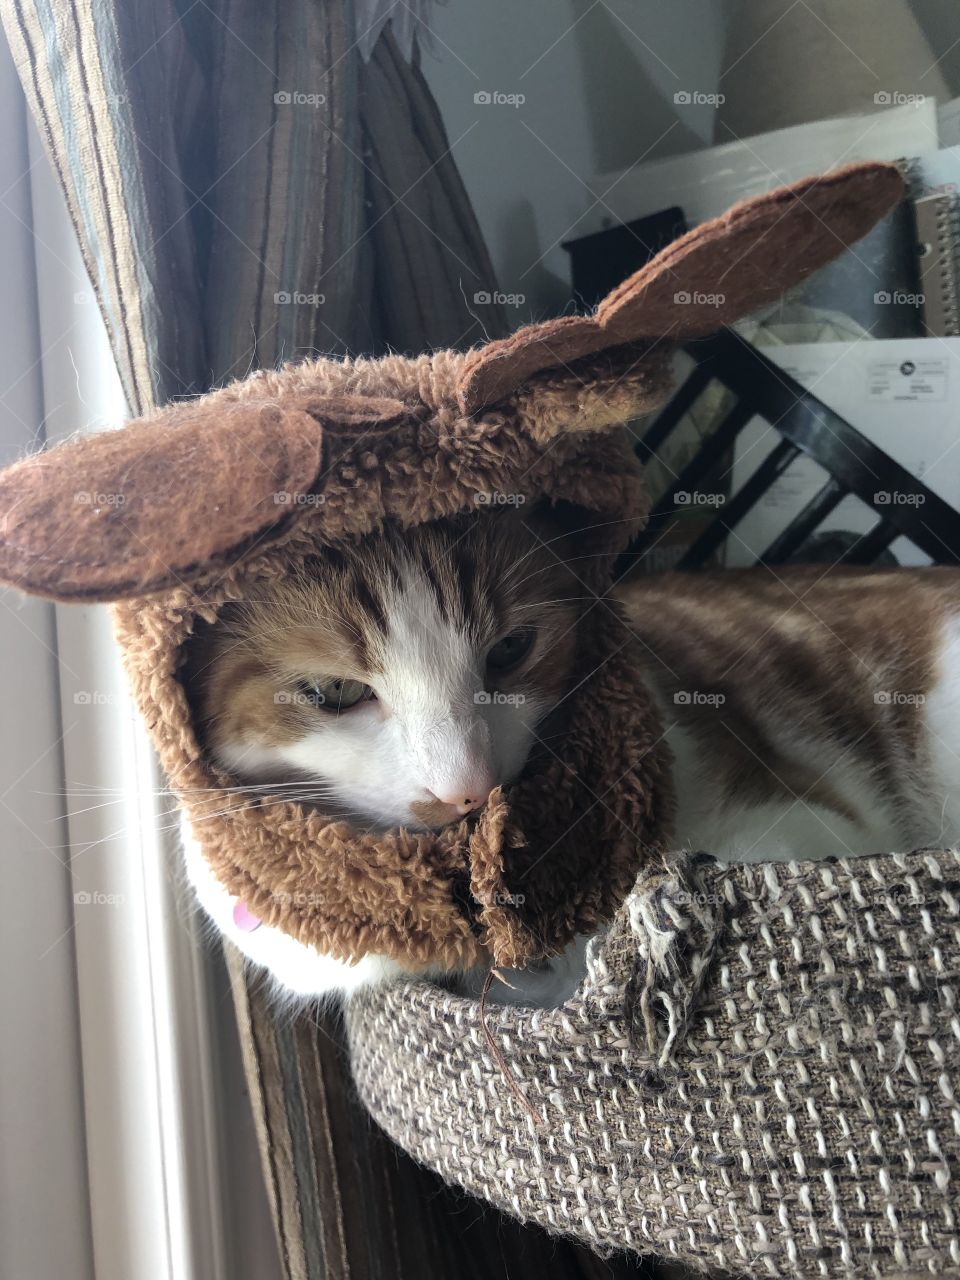 Kitty wearing a hat 